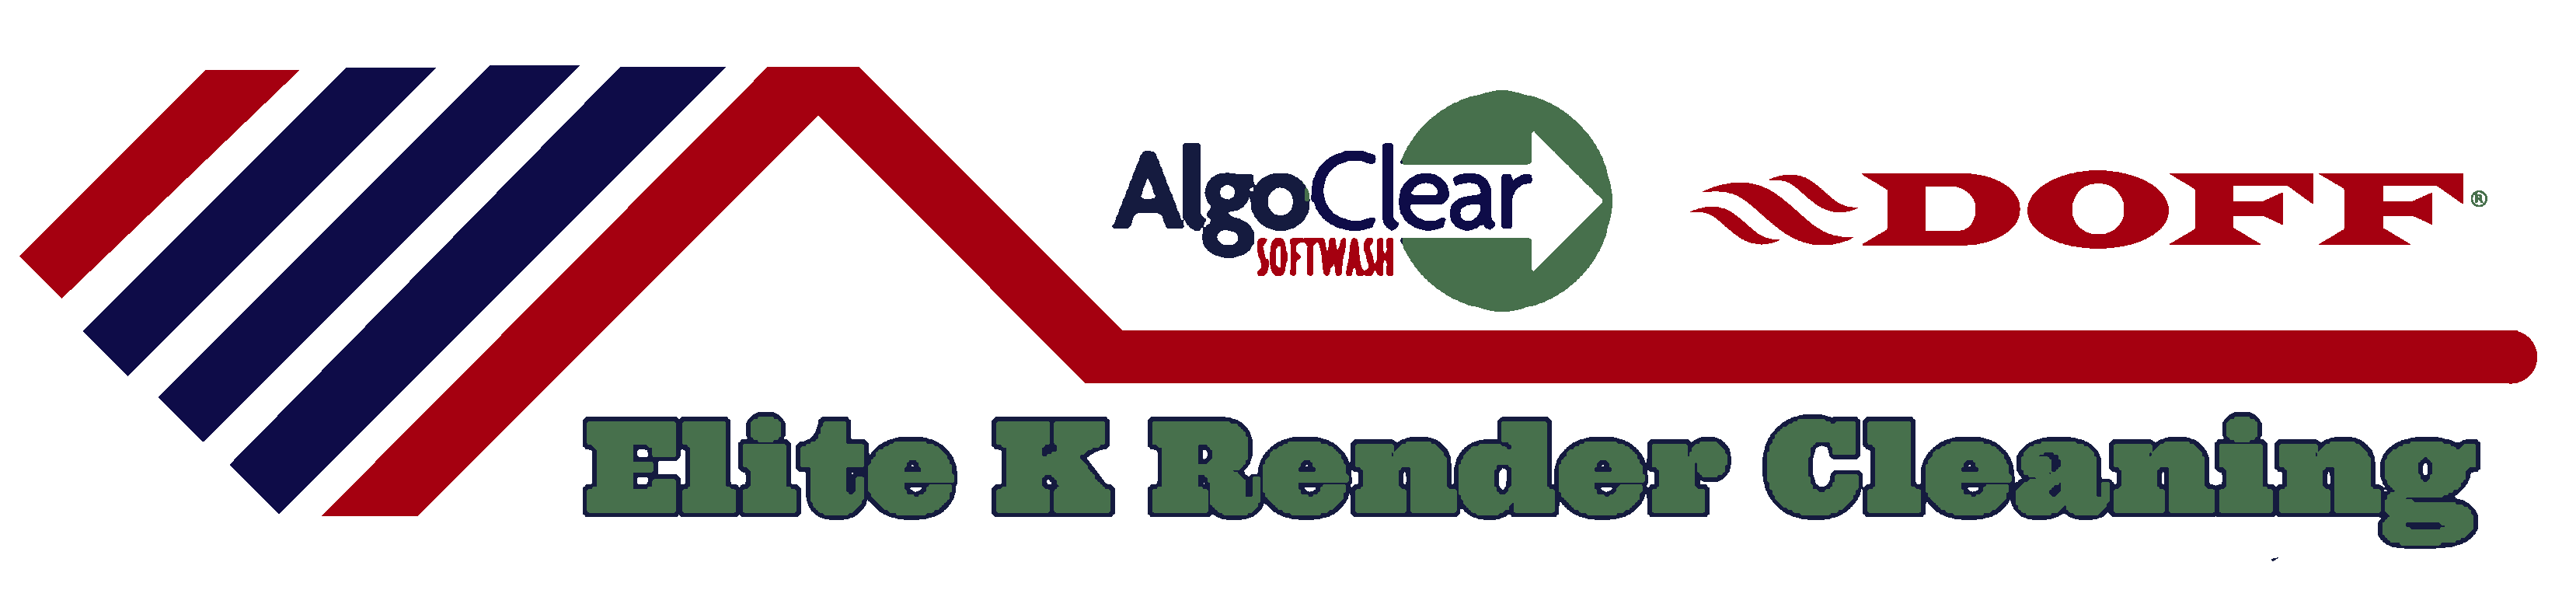 K Render Cleaning in Sandbanks